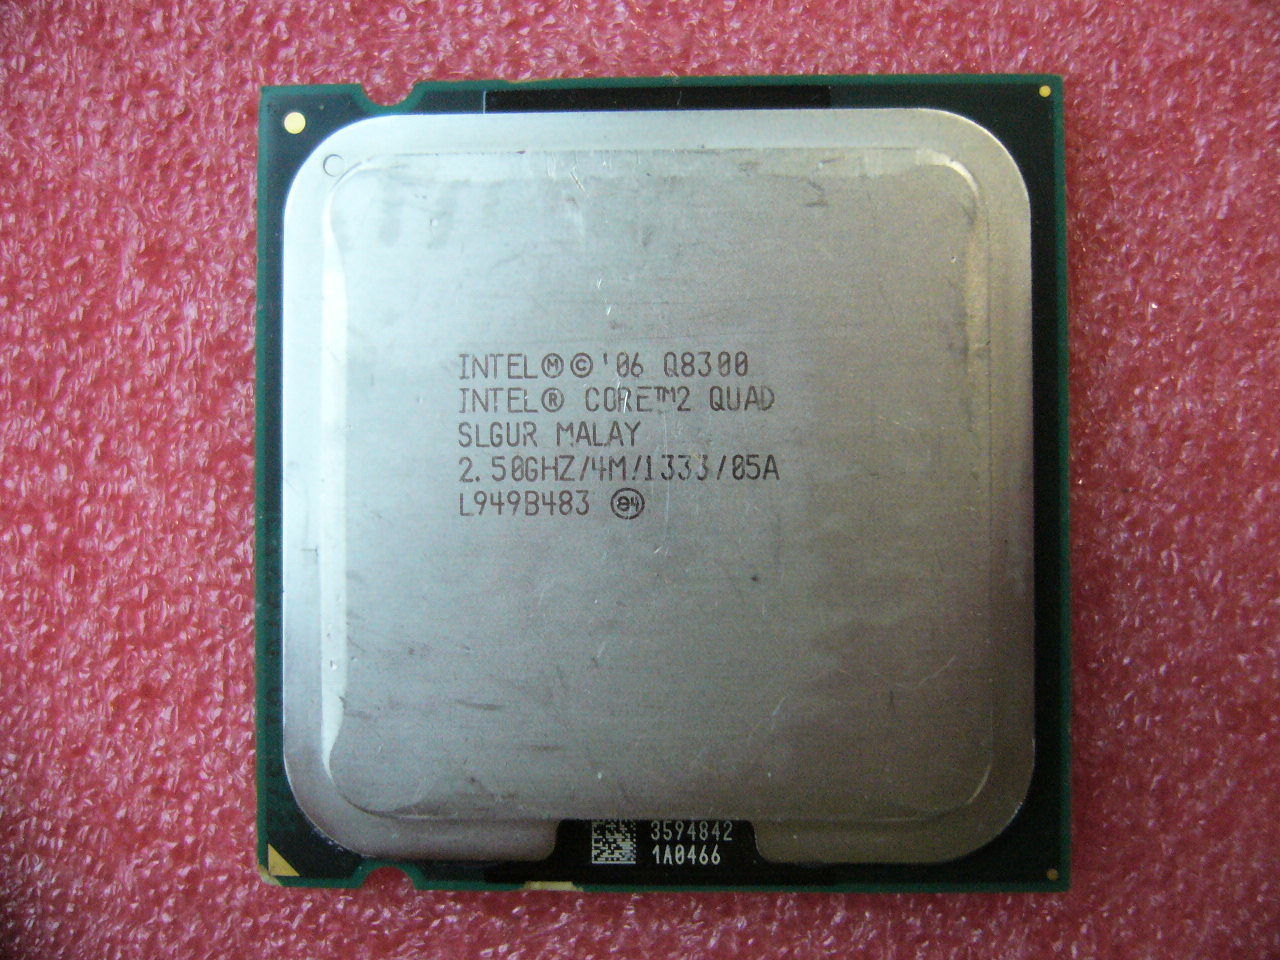 Интел коре 7400. Intel Core 2 Quad 2.50GHZ. Slb5w q8300. Intel Core q8300. Процессор Intel Core 2 Quad slb5m Malay 2.50GHZ.